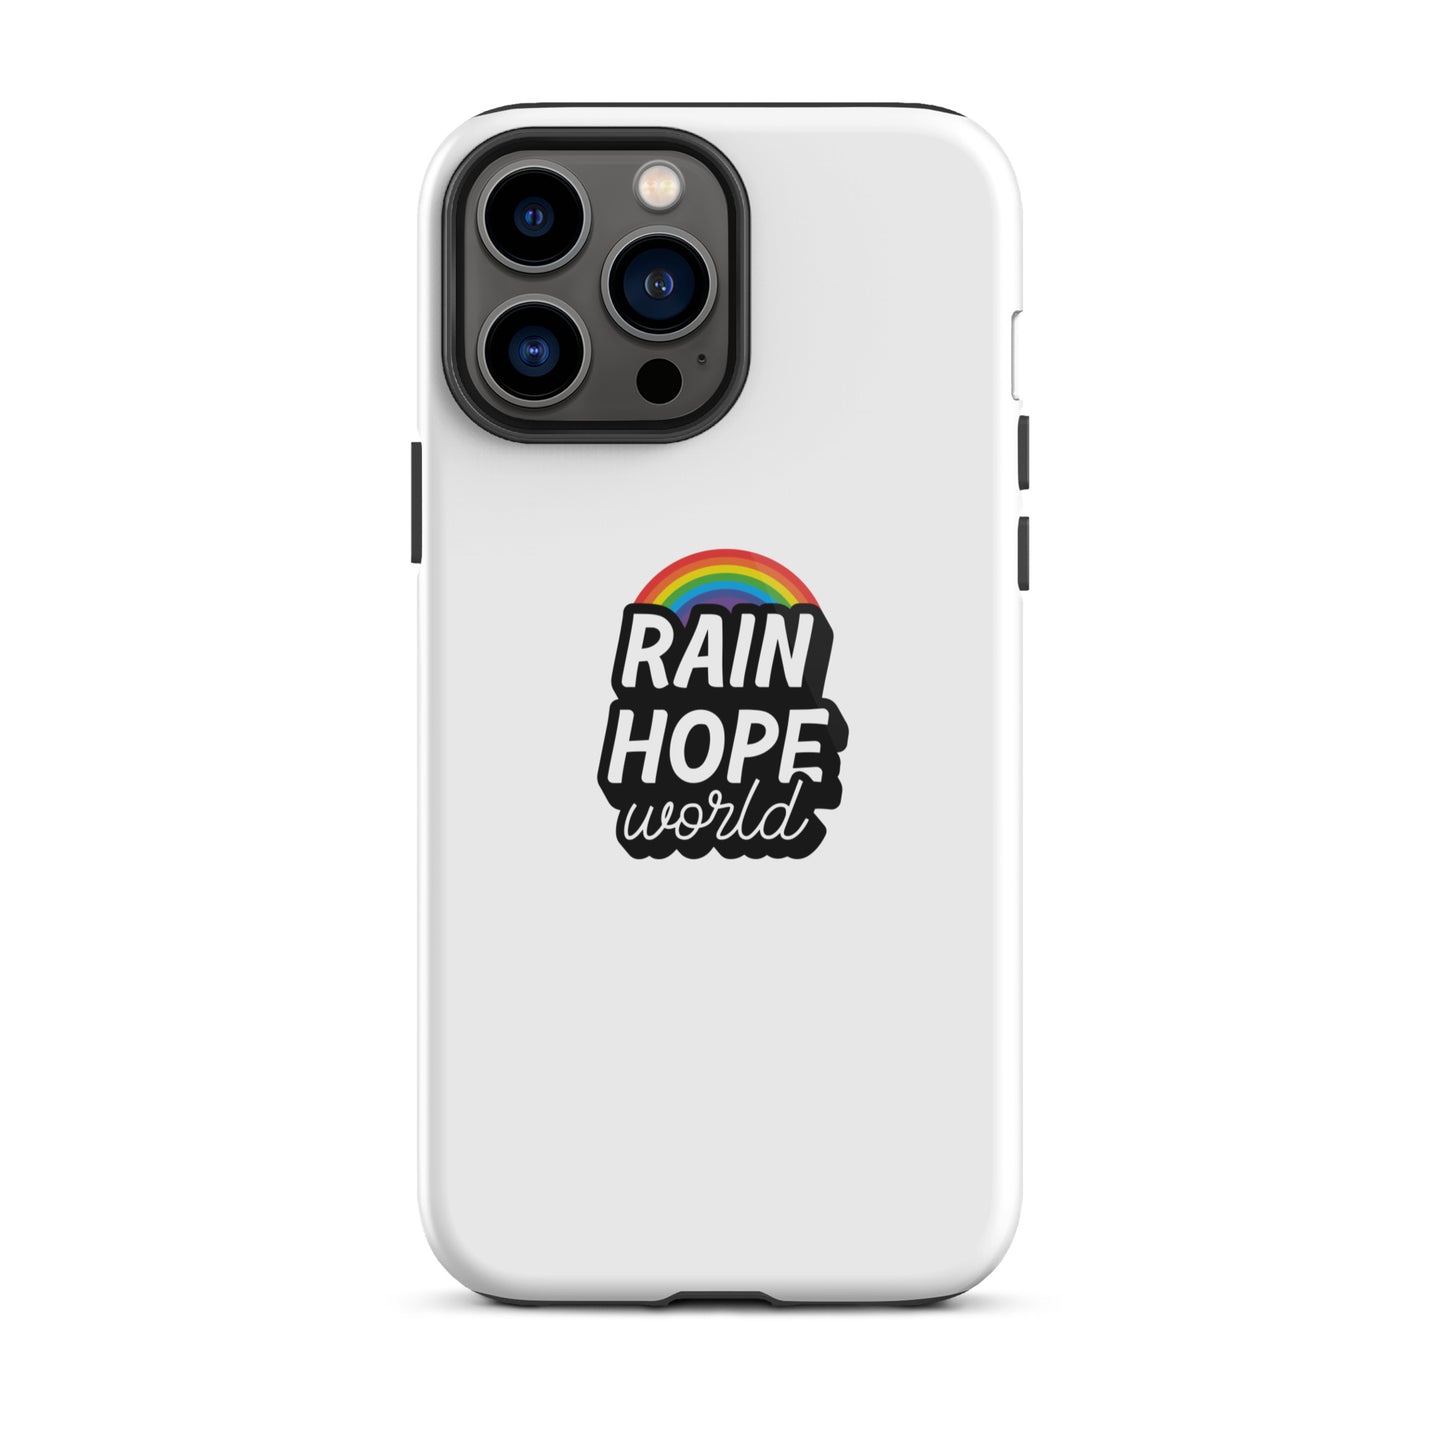 Rain Hope World Tough iPhone case